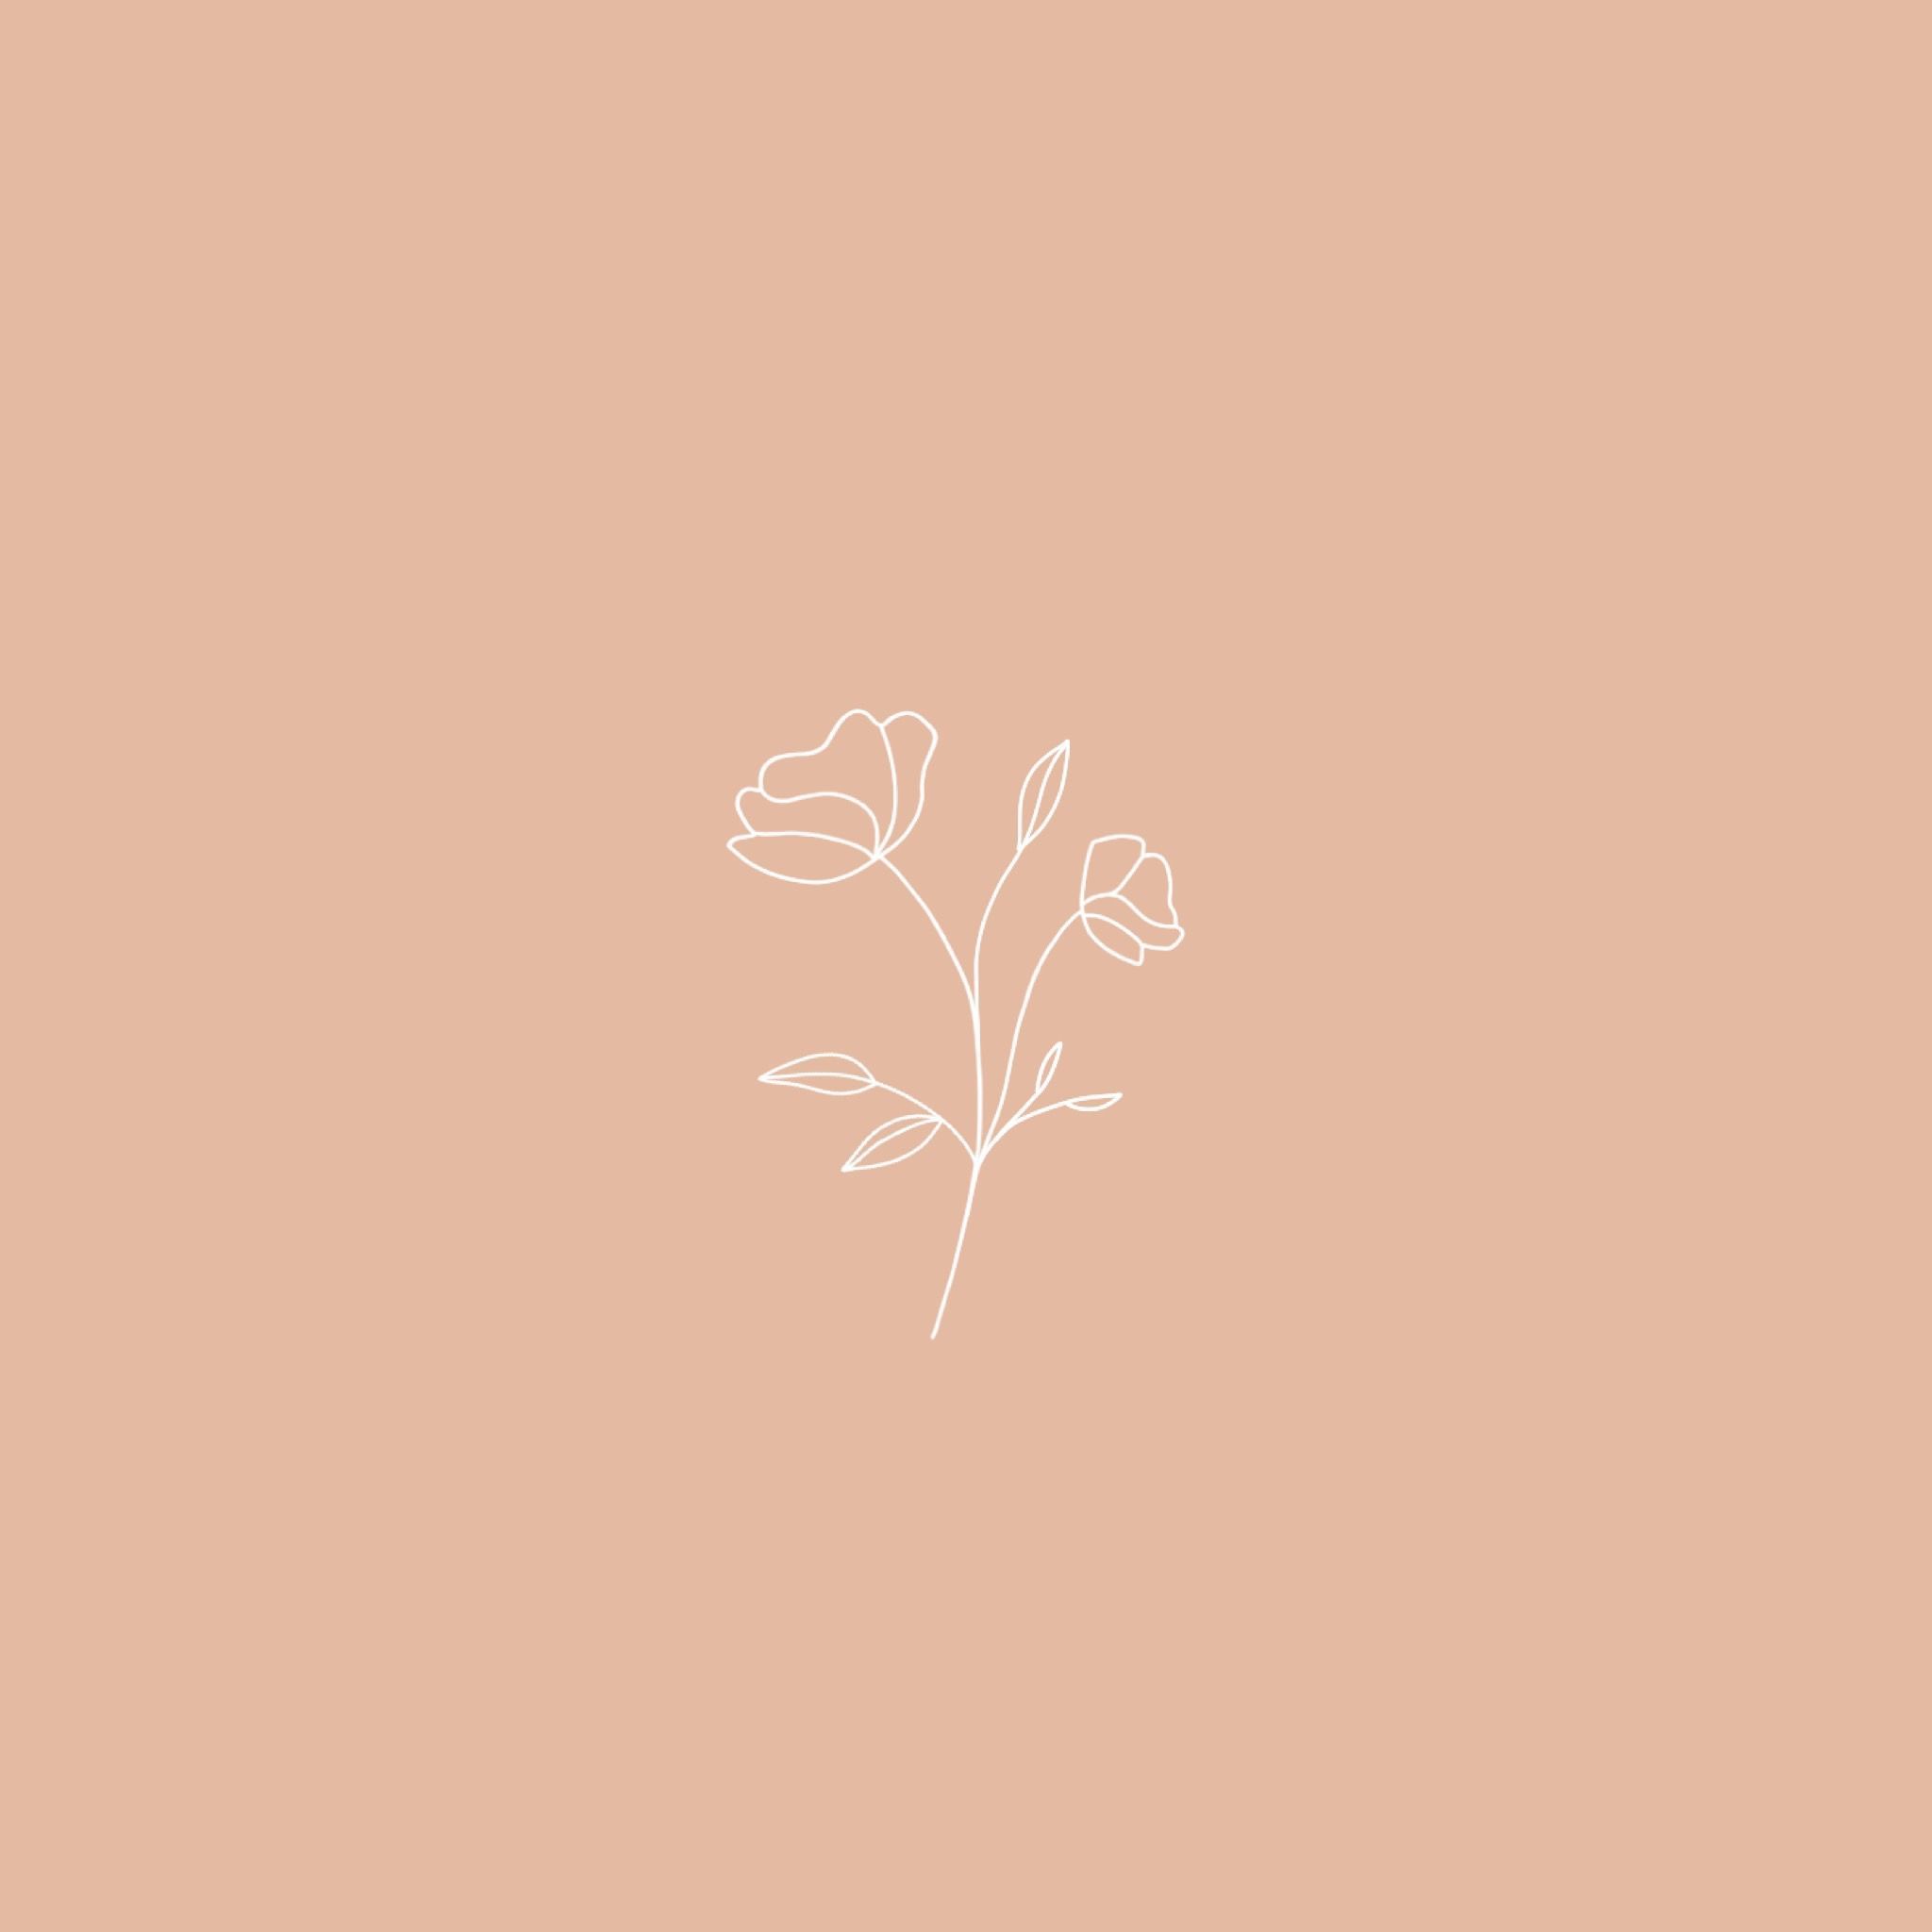 A simple flower logo on an orange background - Minimalist beige